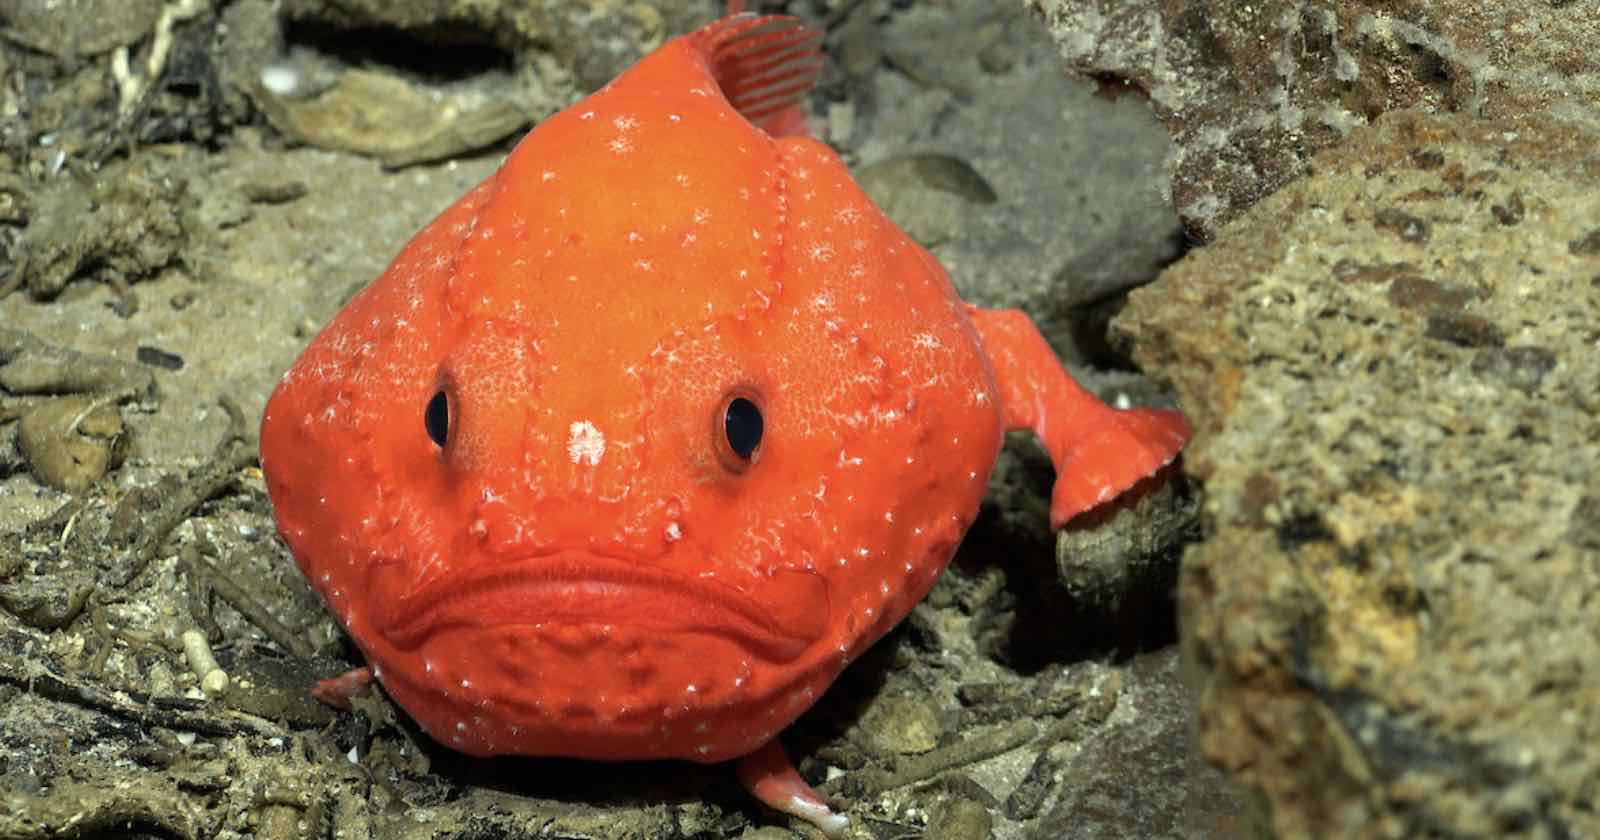  scientists photograph never-before-seen deep sea species 